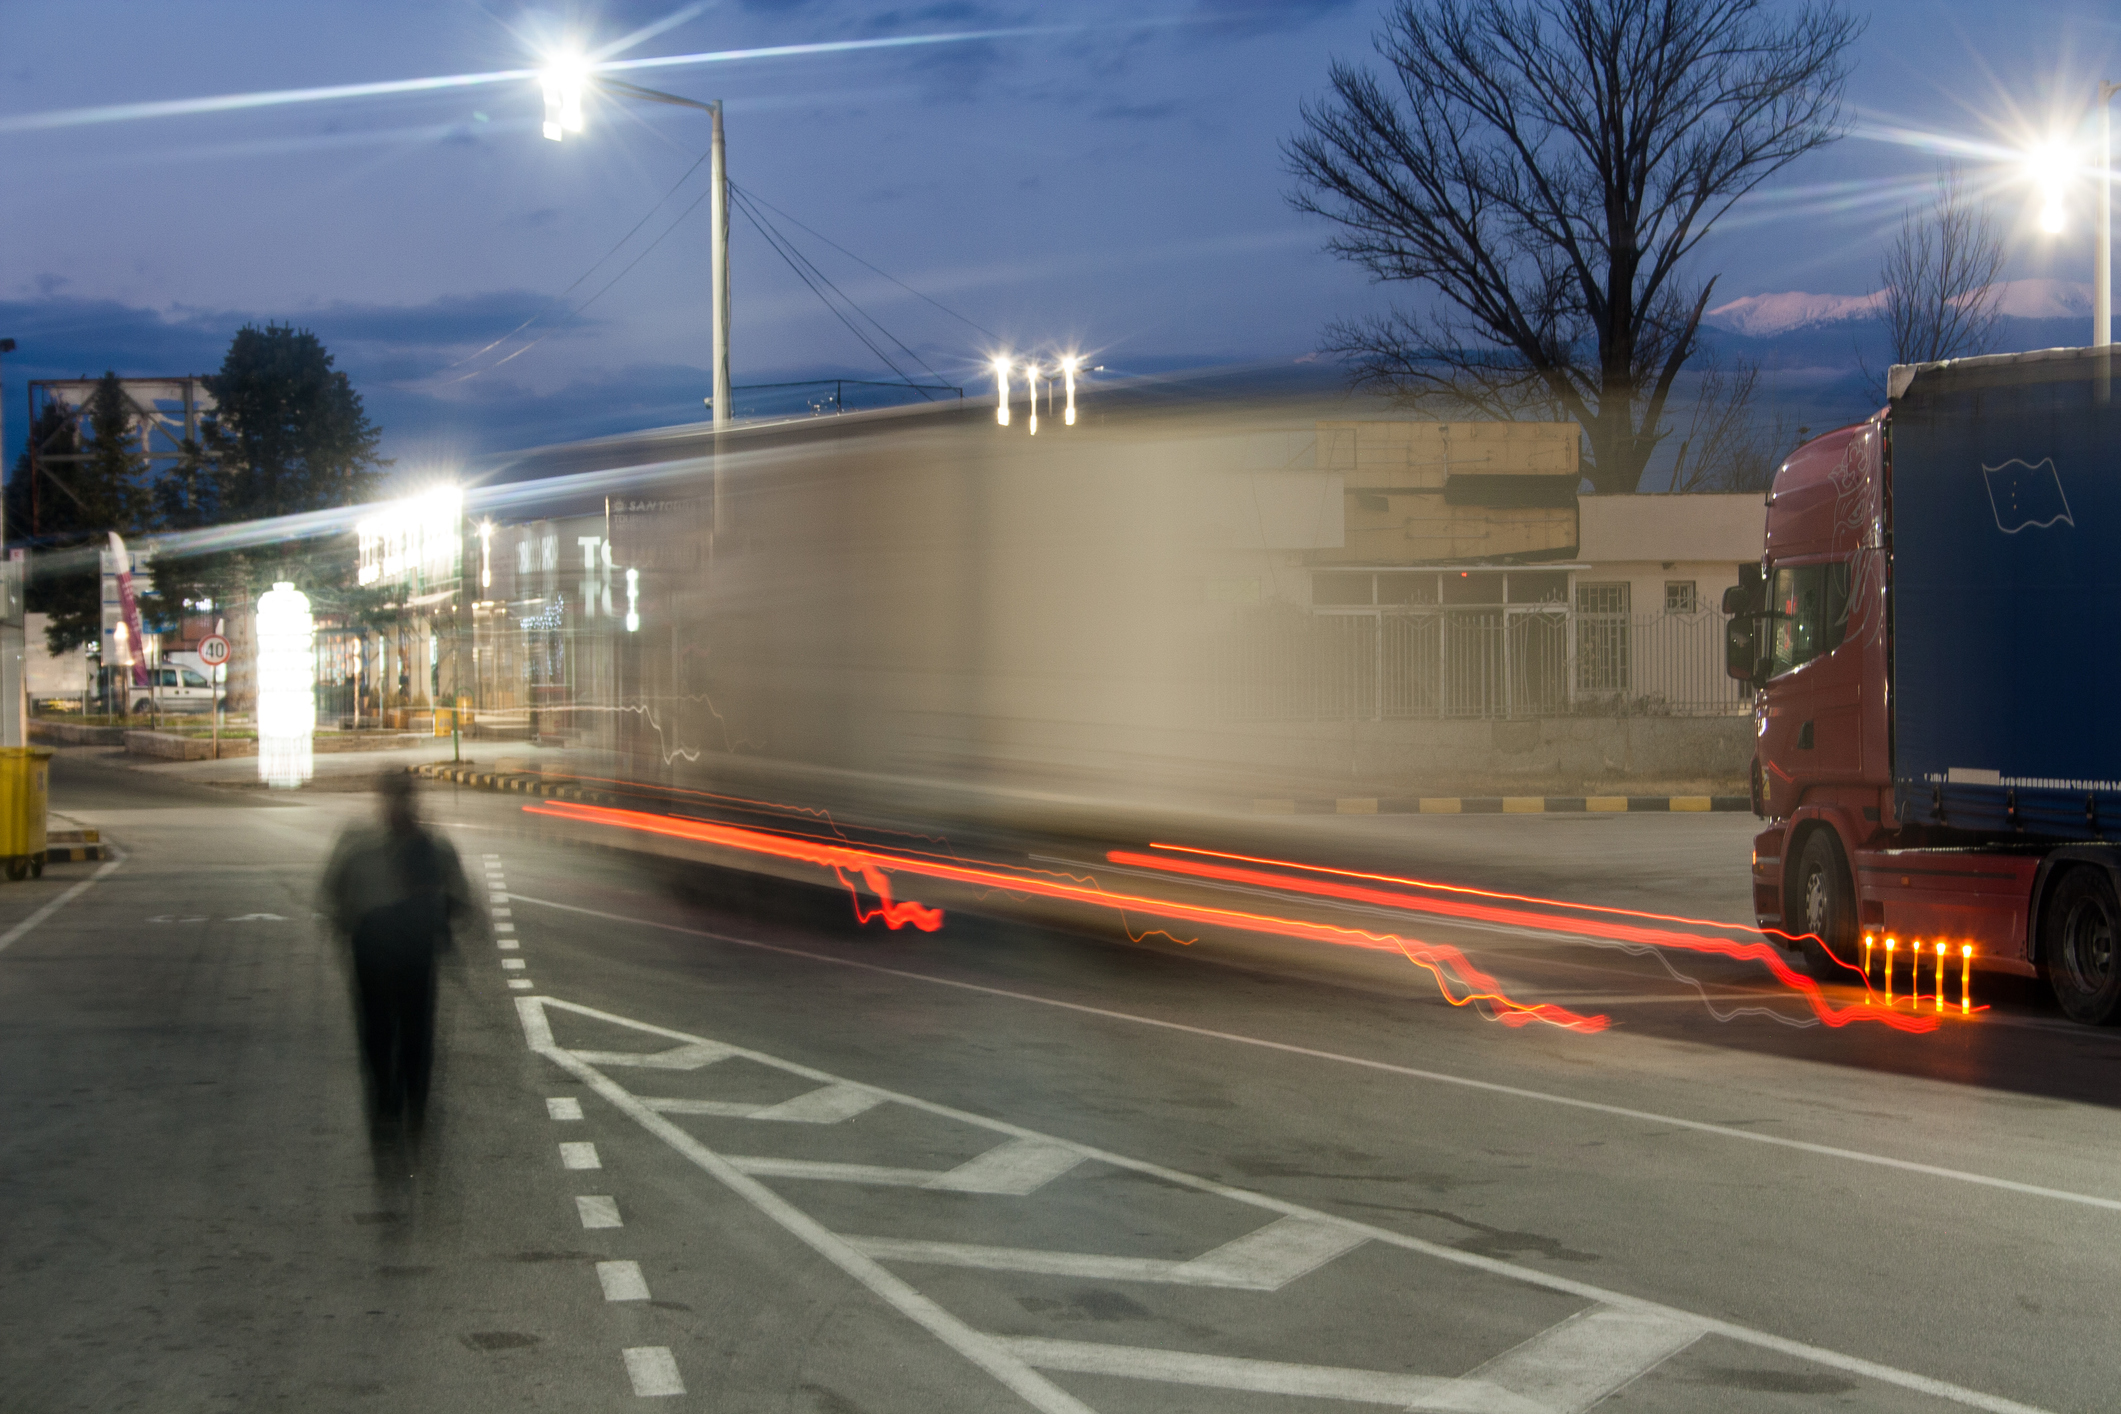 A semi truck driving down a city street at night, while a pedestrian walks alongside it.